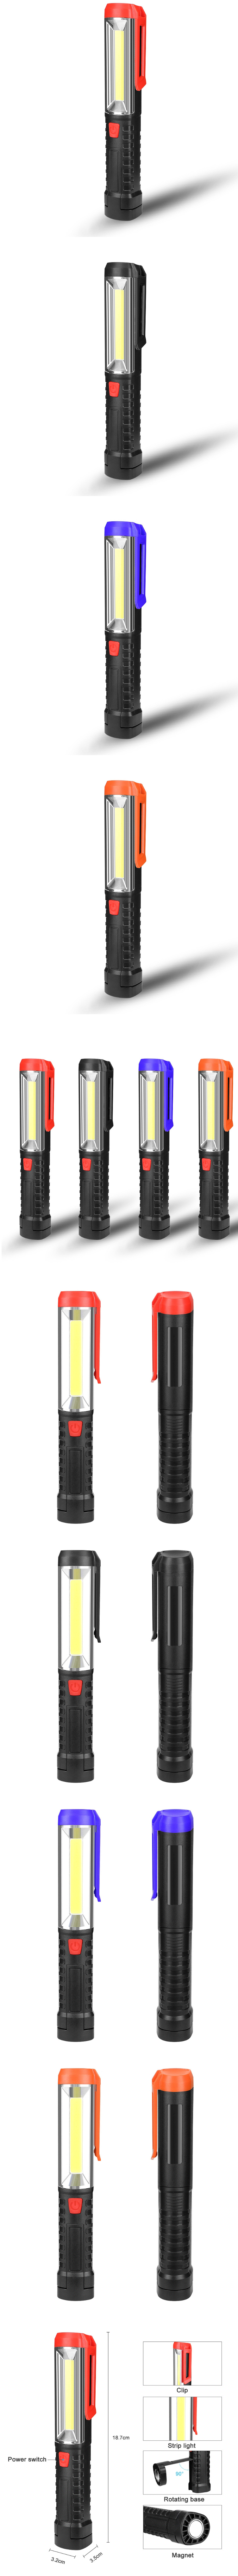 90deg-Rotation-COBLED-USB-Rechargeable-Emergency-Worklight-with-Magnetic-Flashlight-LED-Work-Light-1551231